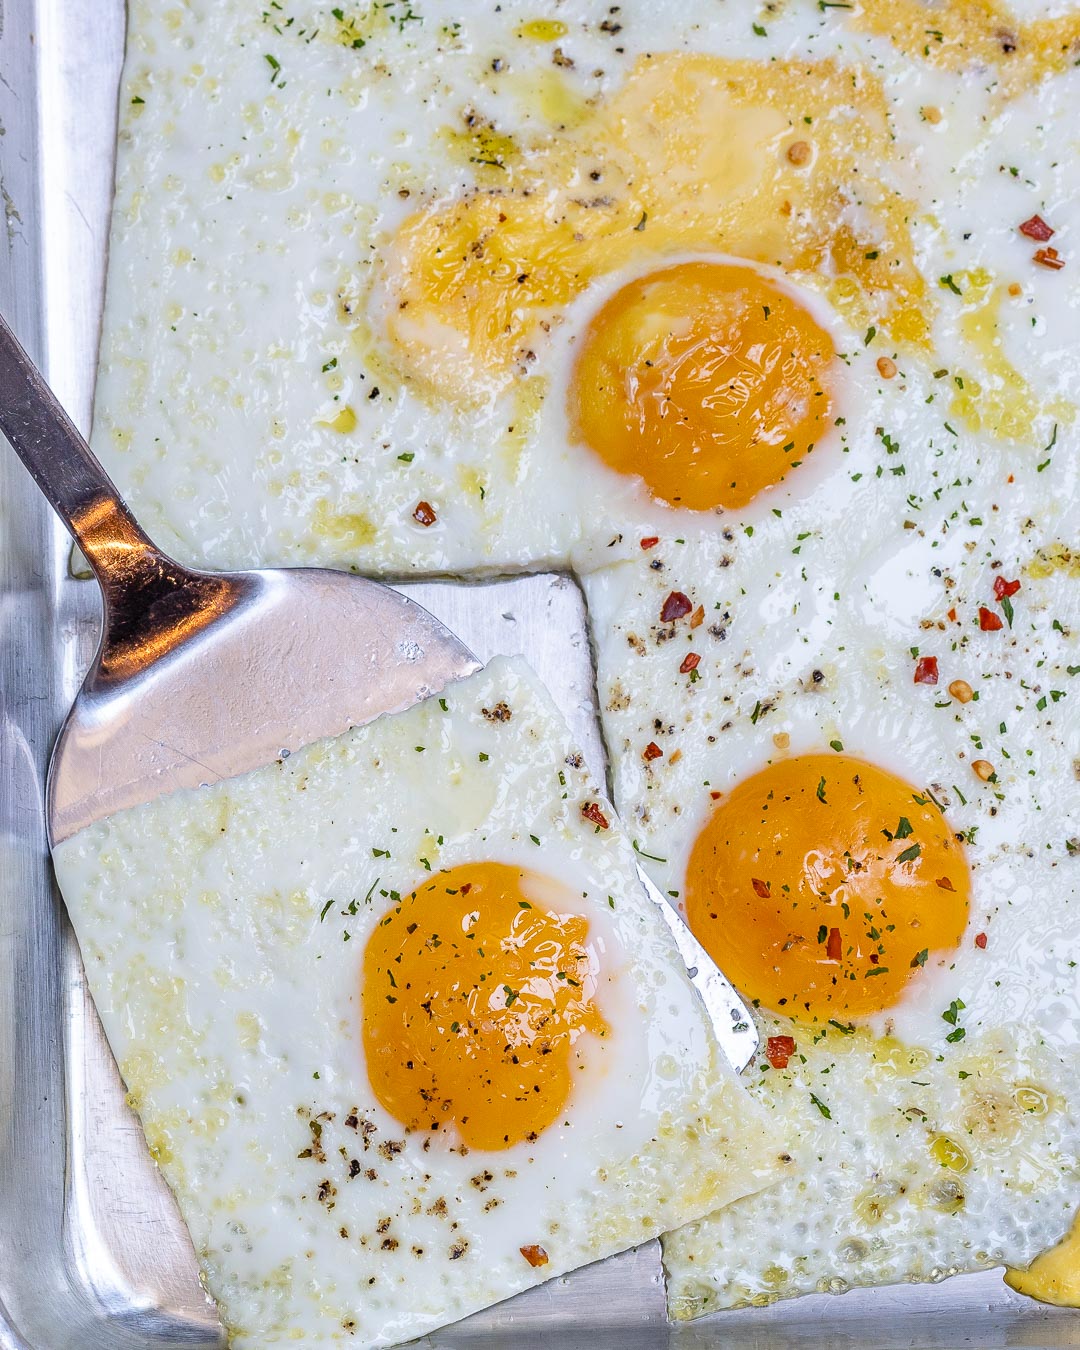 https://cleanfoodcrush.com/wp-content/uploads/2019/02/Quick-Easy-Sheet-Pan-Eggs.jpg